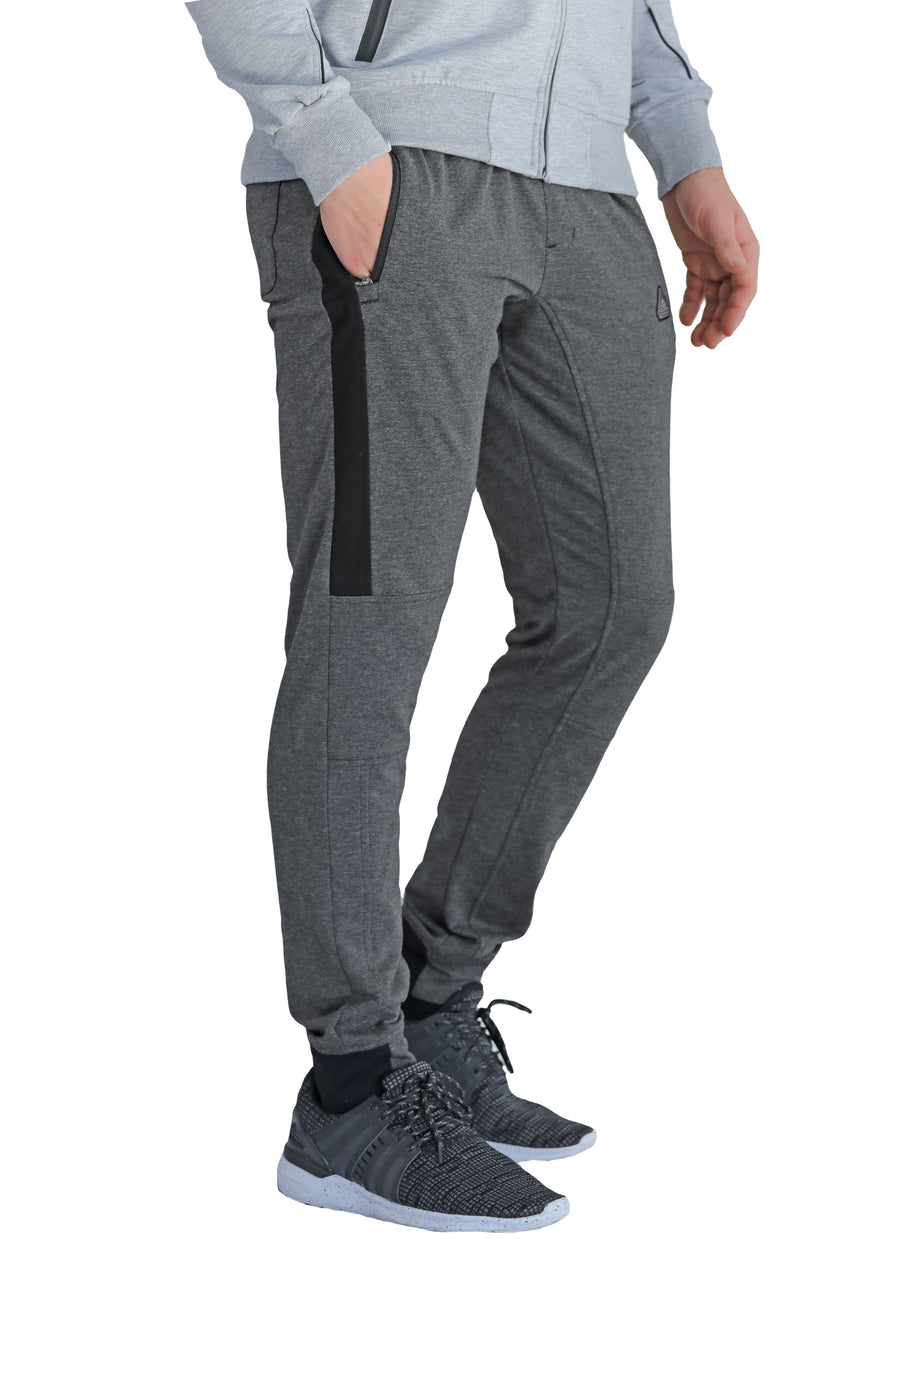  SCR SPORTSWEAR All-Day Comfort Ultimate Flex Men's Sweatpants  Training Pants Men's Casual Pants Tall Long 30/33/36 Inseam (2XL/34,  MDB/G-K916) : Clothing, Shoes & Jewelry